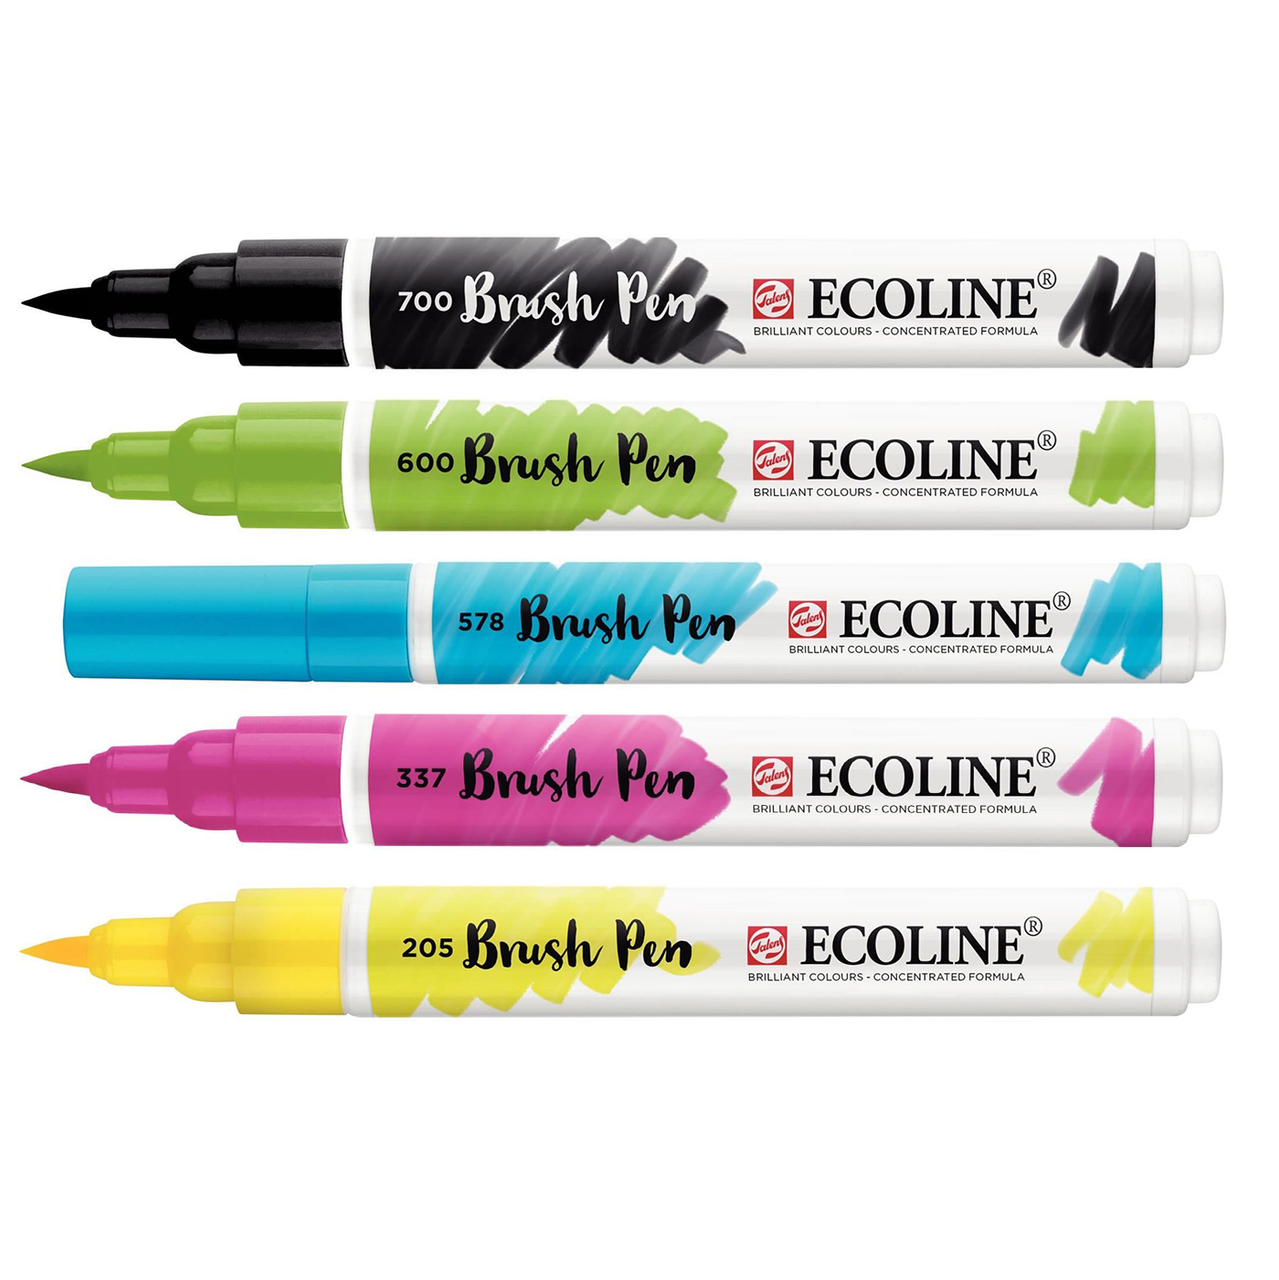 Ecoline Brush Pen Set of 10